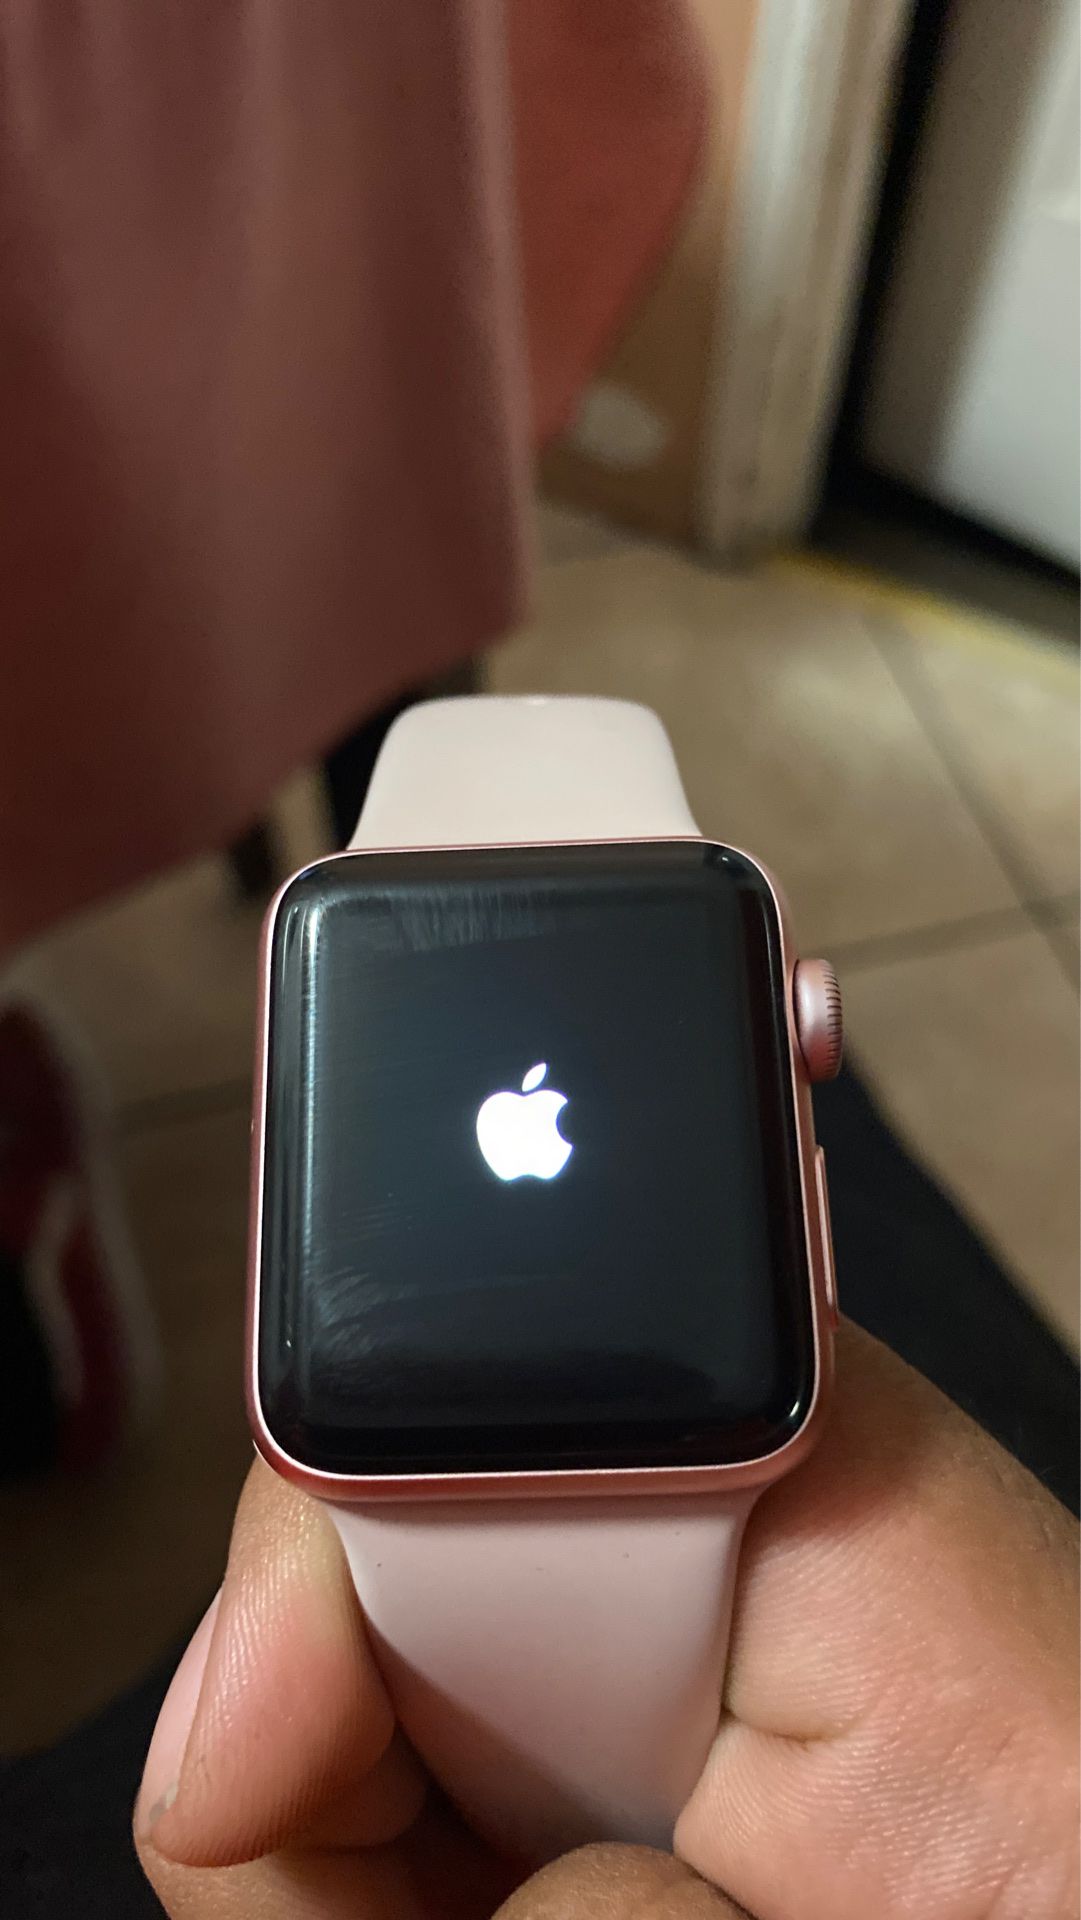 Apple Watch series 2 (32 MM)